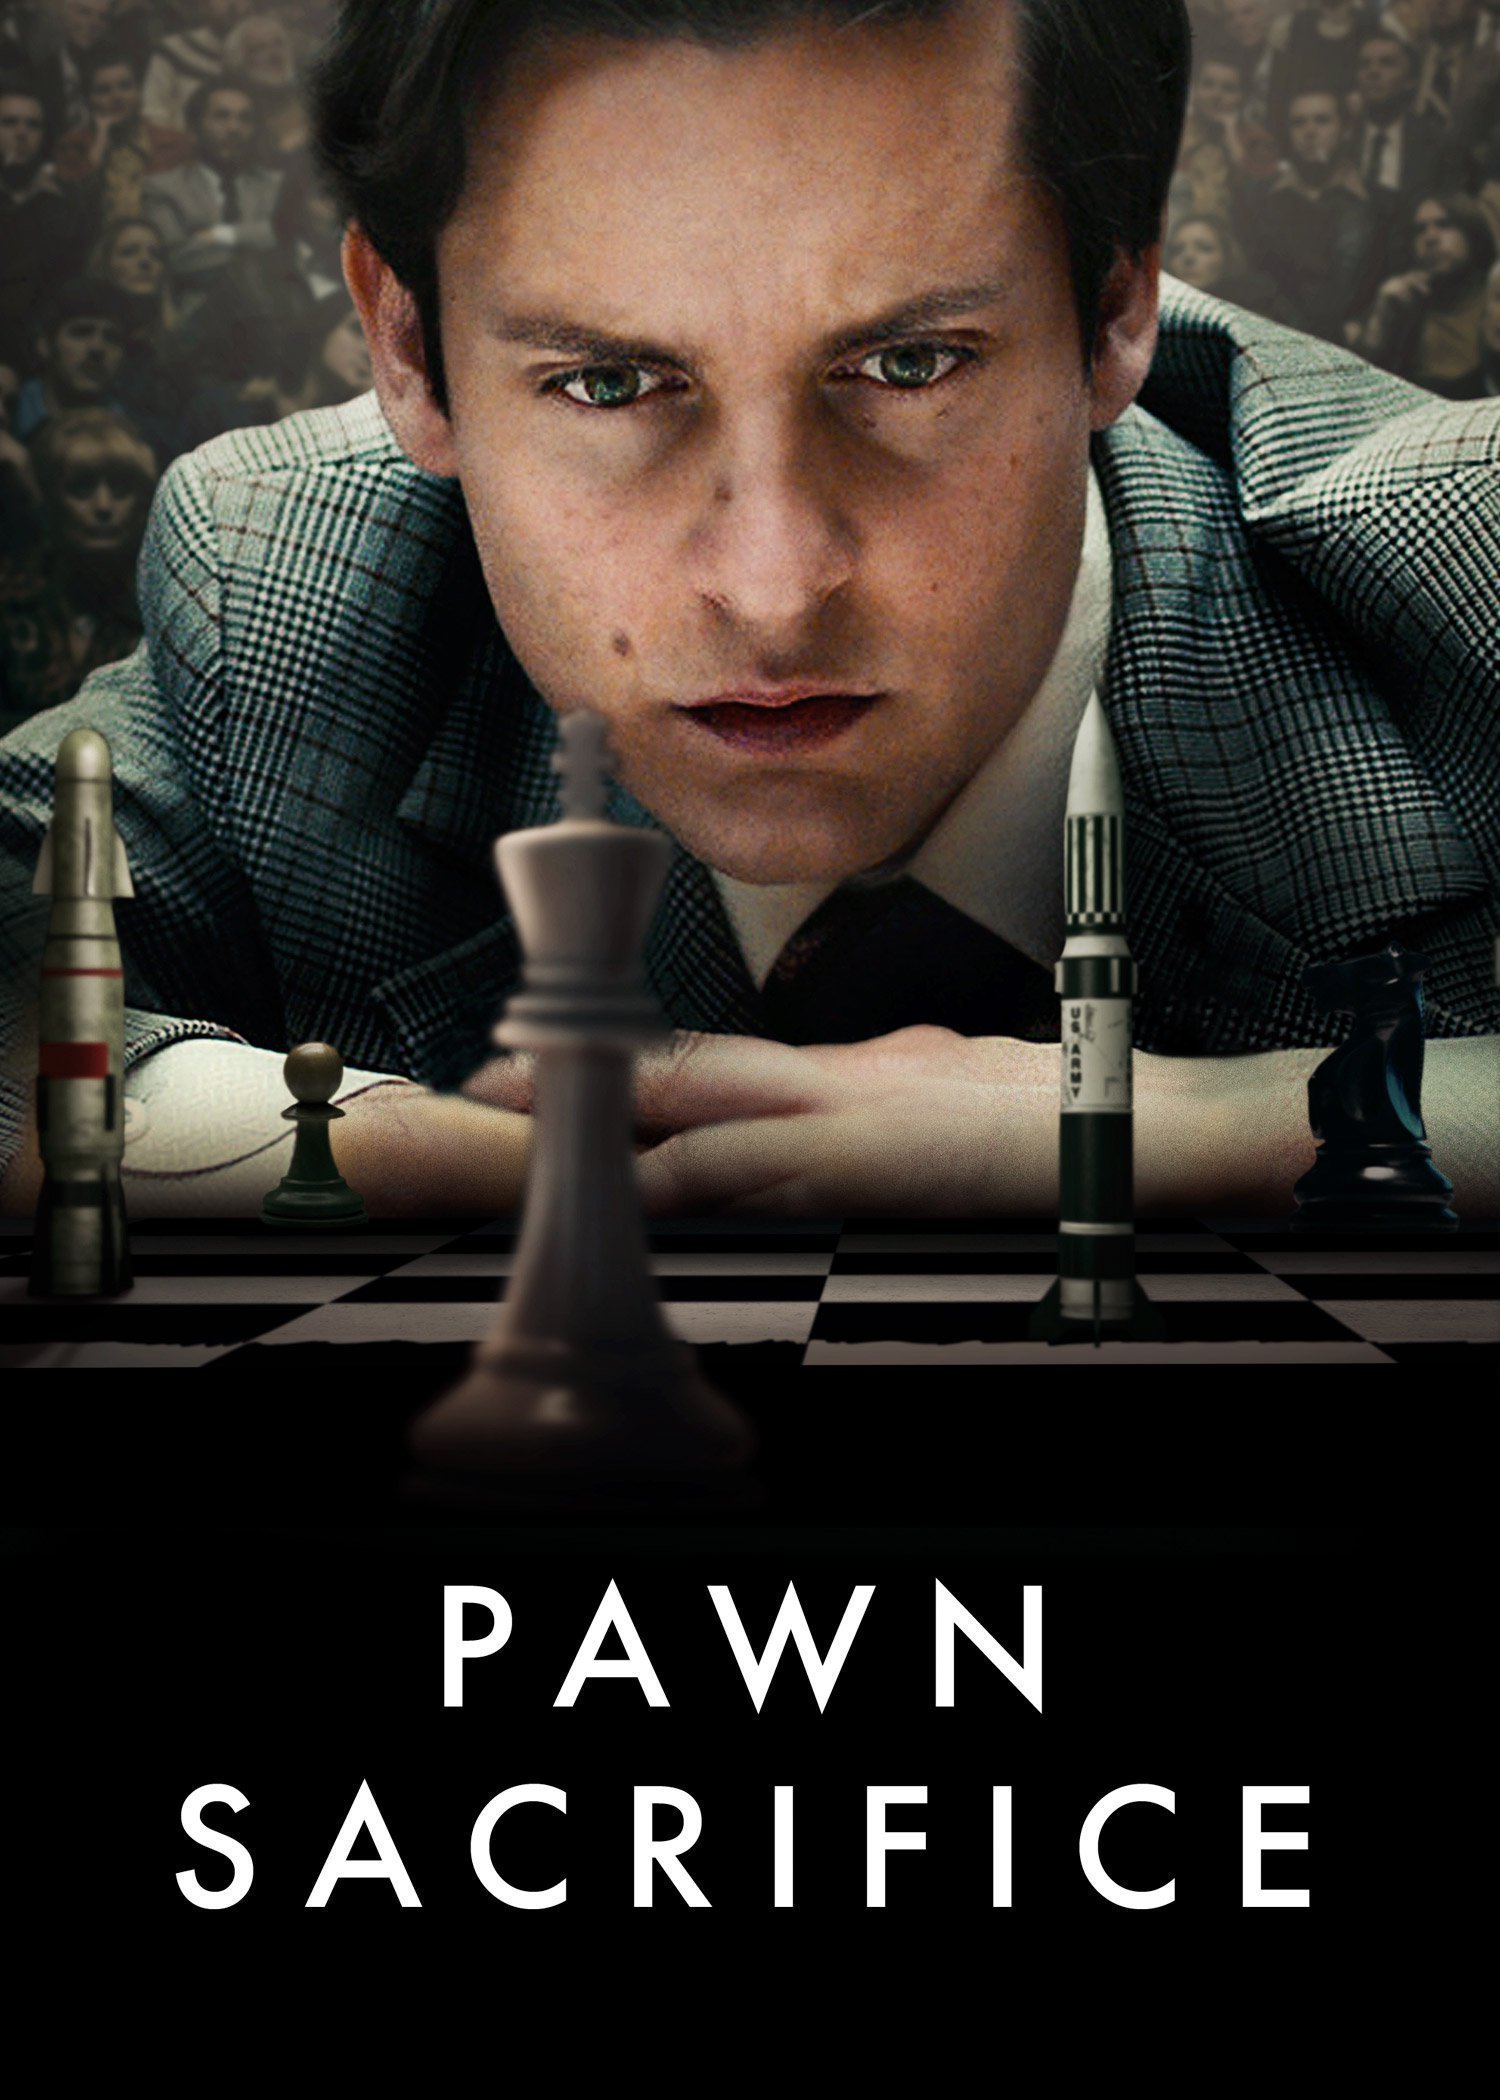 Pawn Sacrifice (2014) - News - IMDb